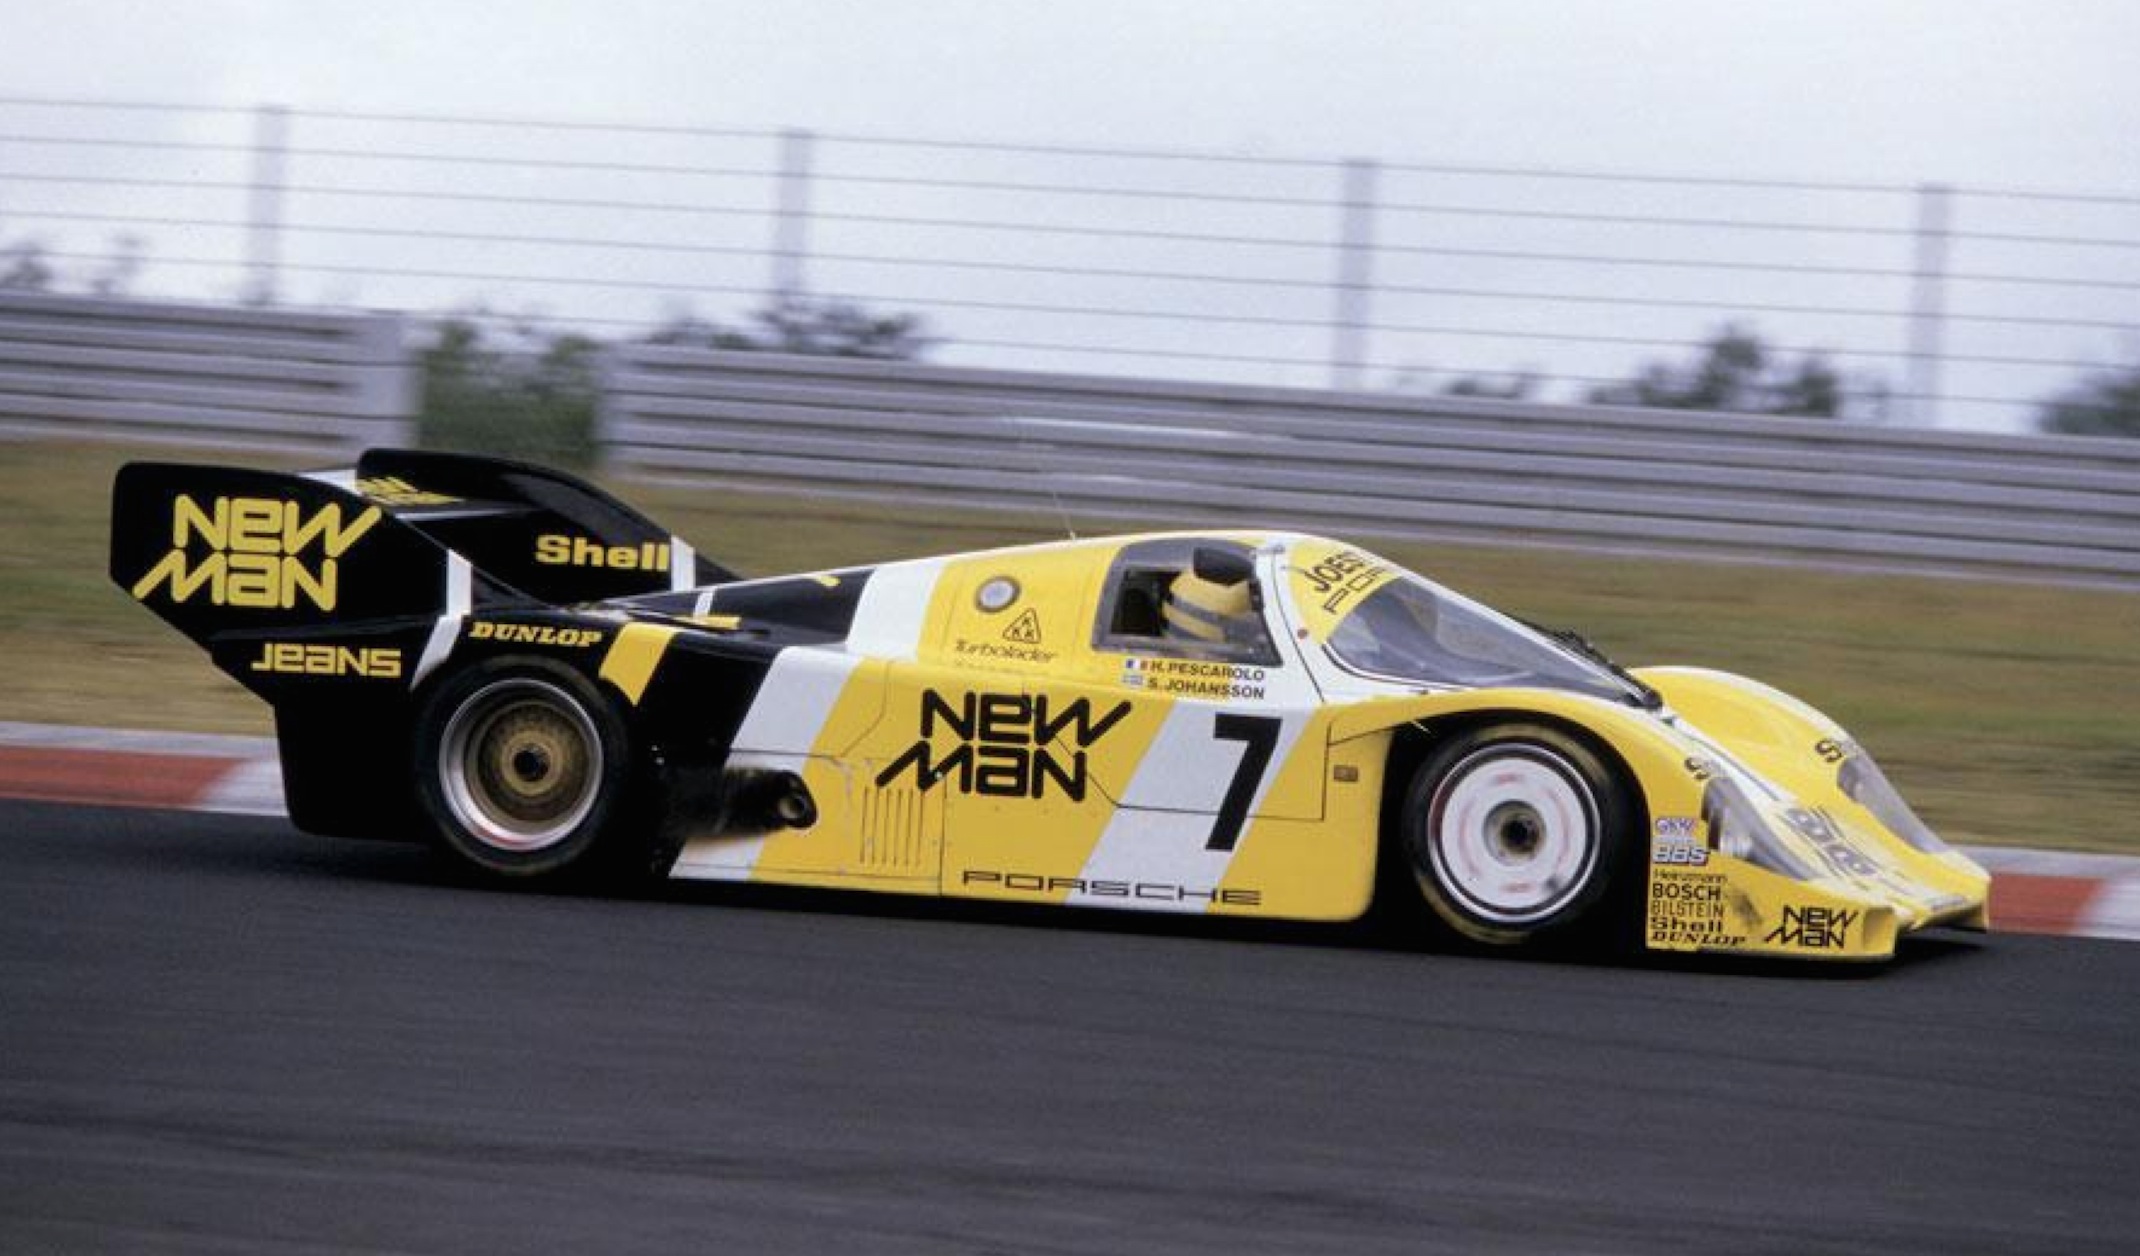 When Senna did sportscars